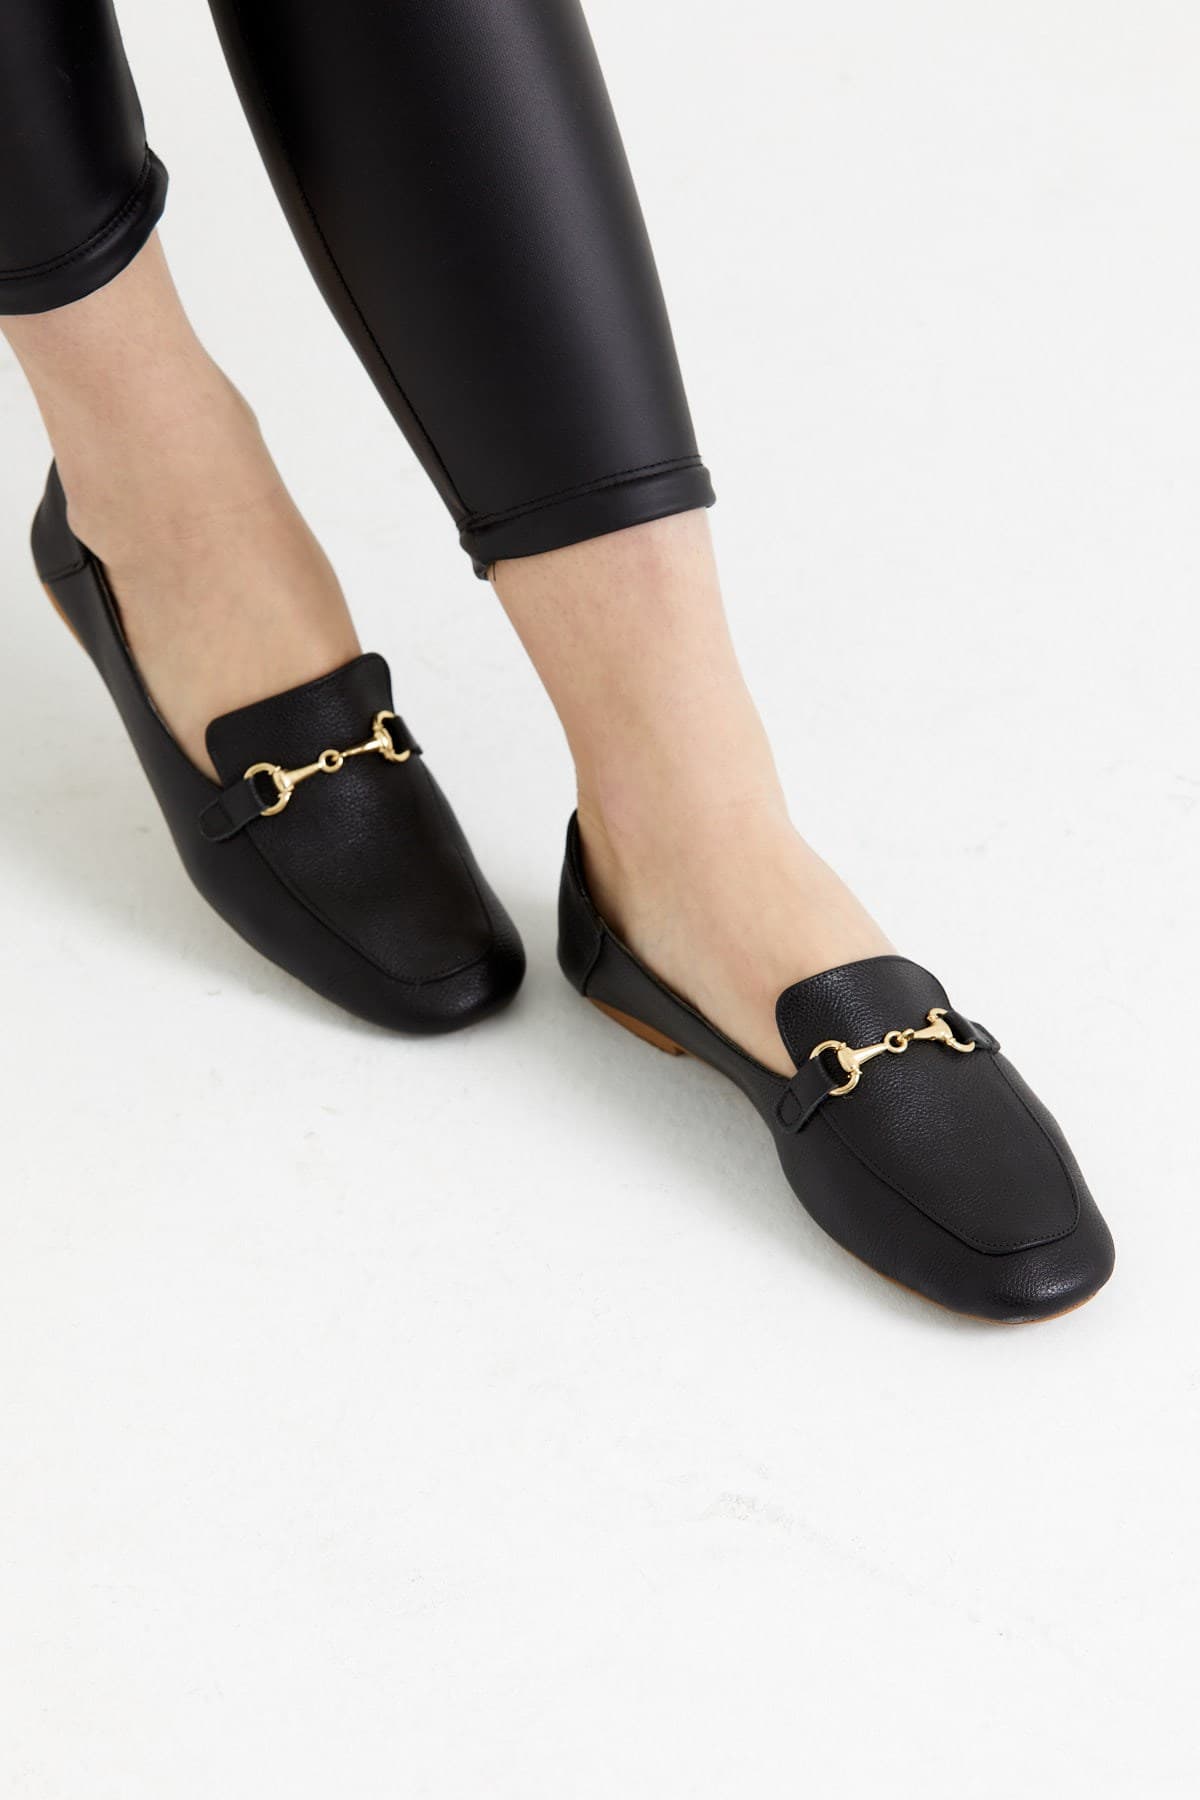 Fabrika MILANO Kadın Loafer Ayakkabı